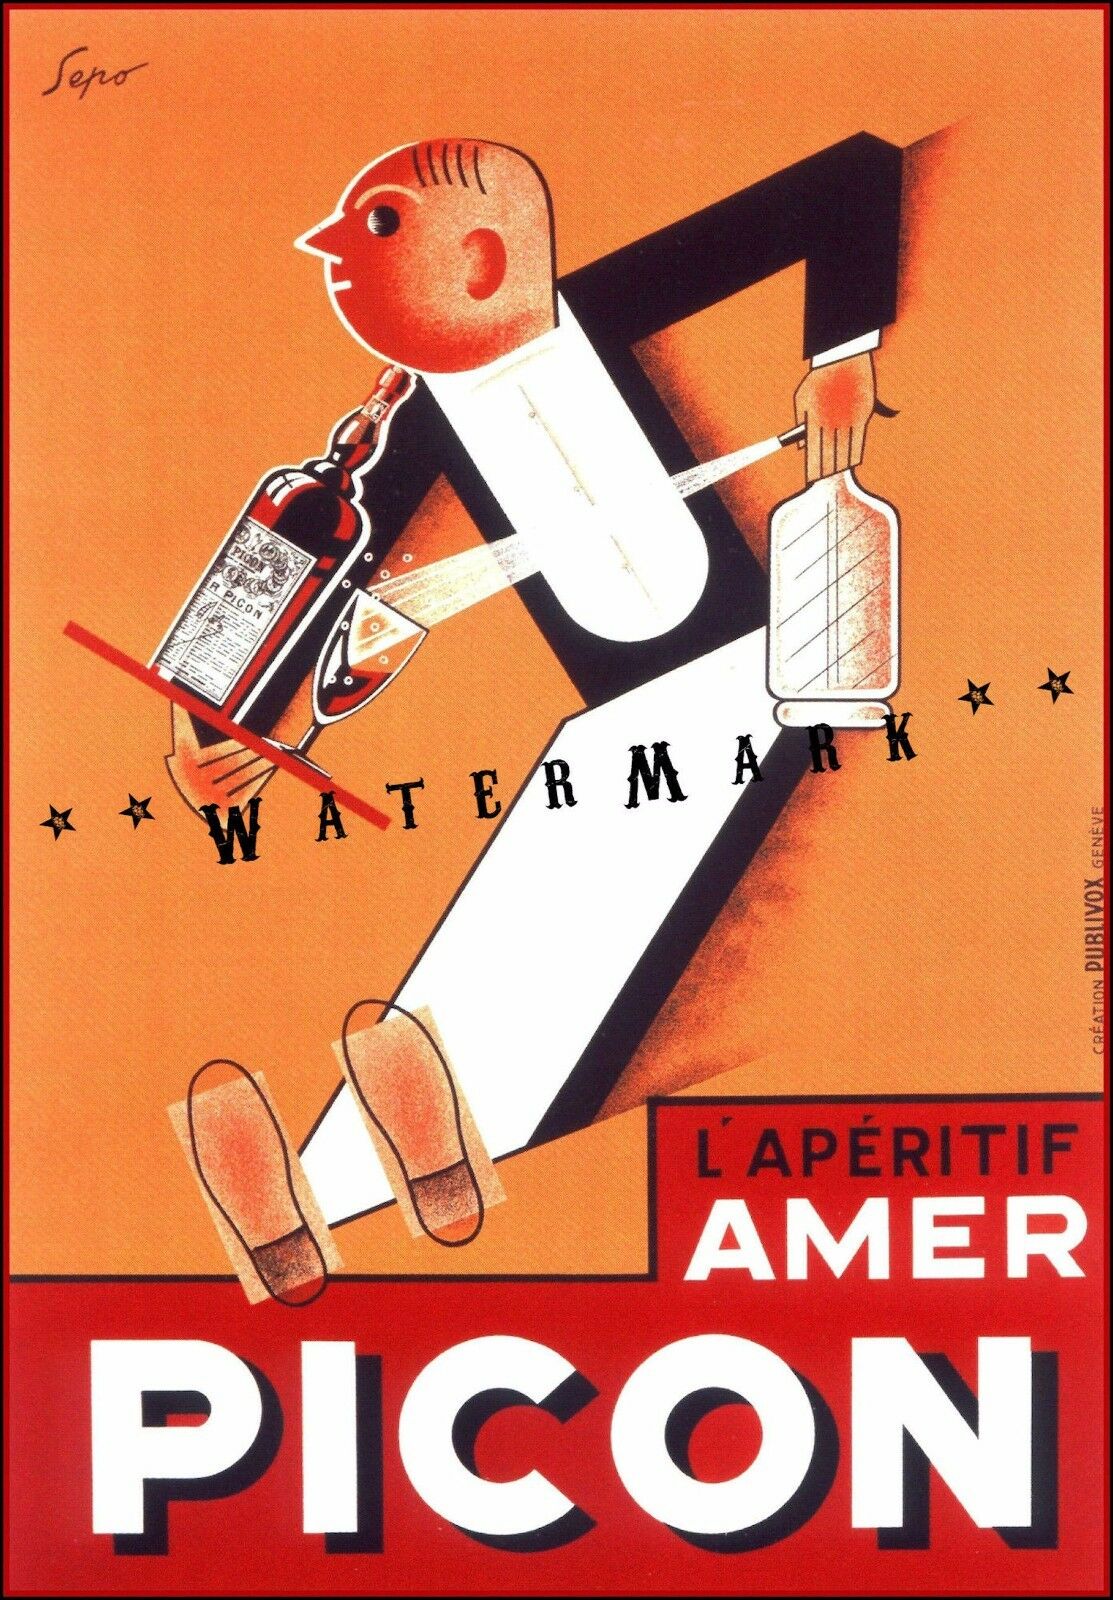 290155 Amer Picon 1934 Laperitif Collectible Poster Affiche Eur 895 Picclick Fr 